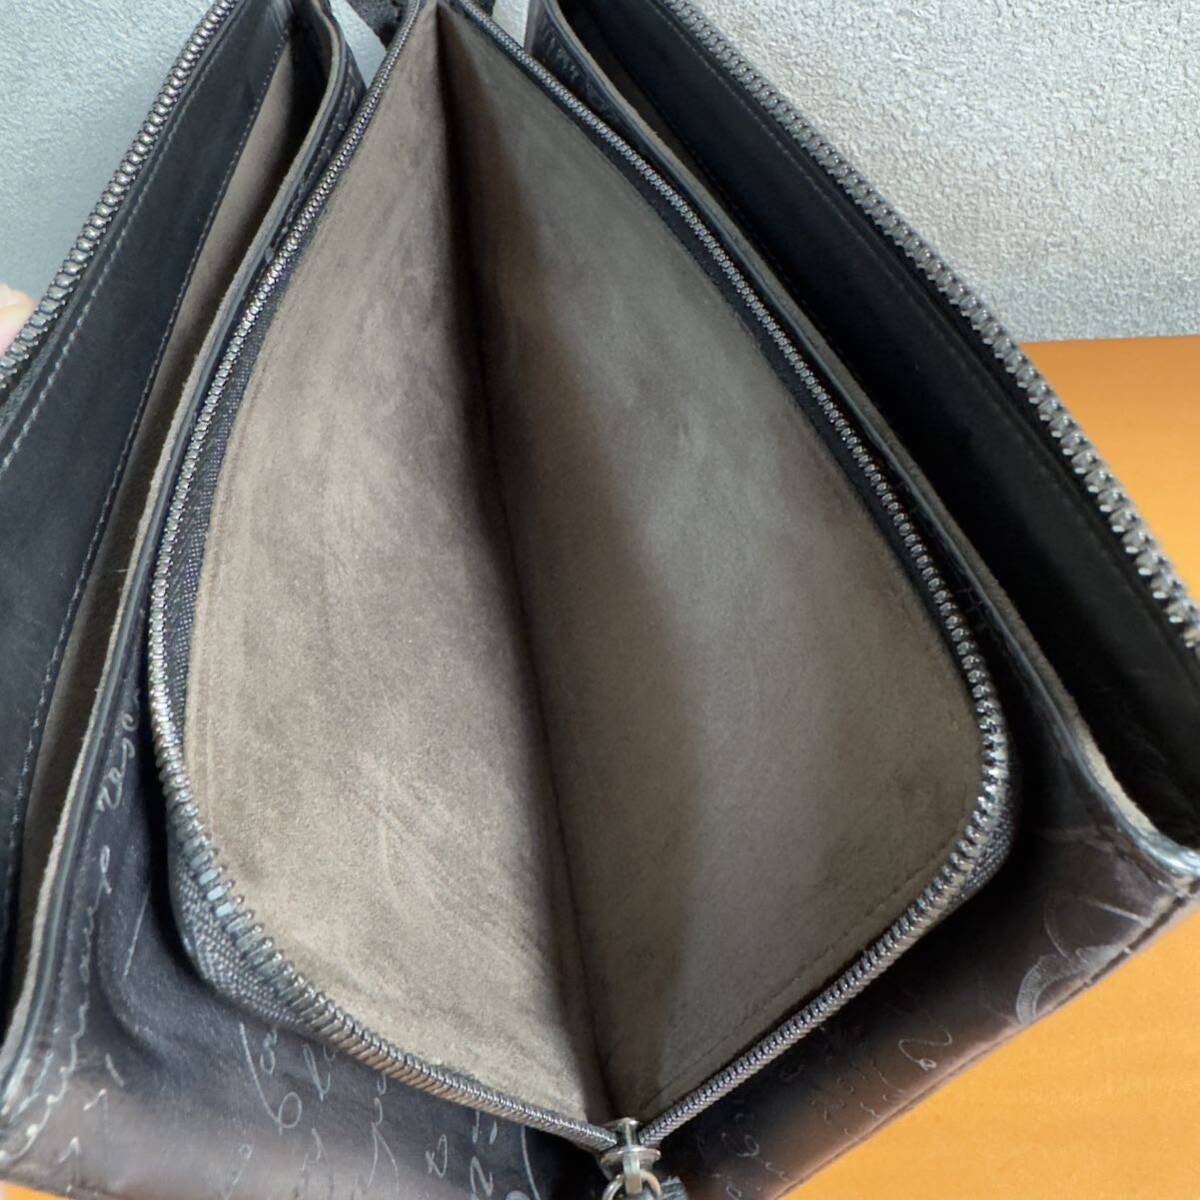  regular price 31.2 ten thousand jpy Berluti terusiokali graph .-sklito leather all-in-one clutch bag purse gray black genuine article TERSIO